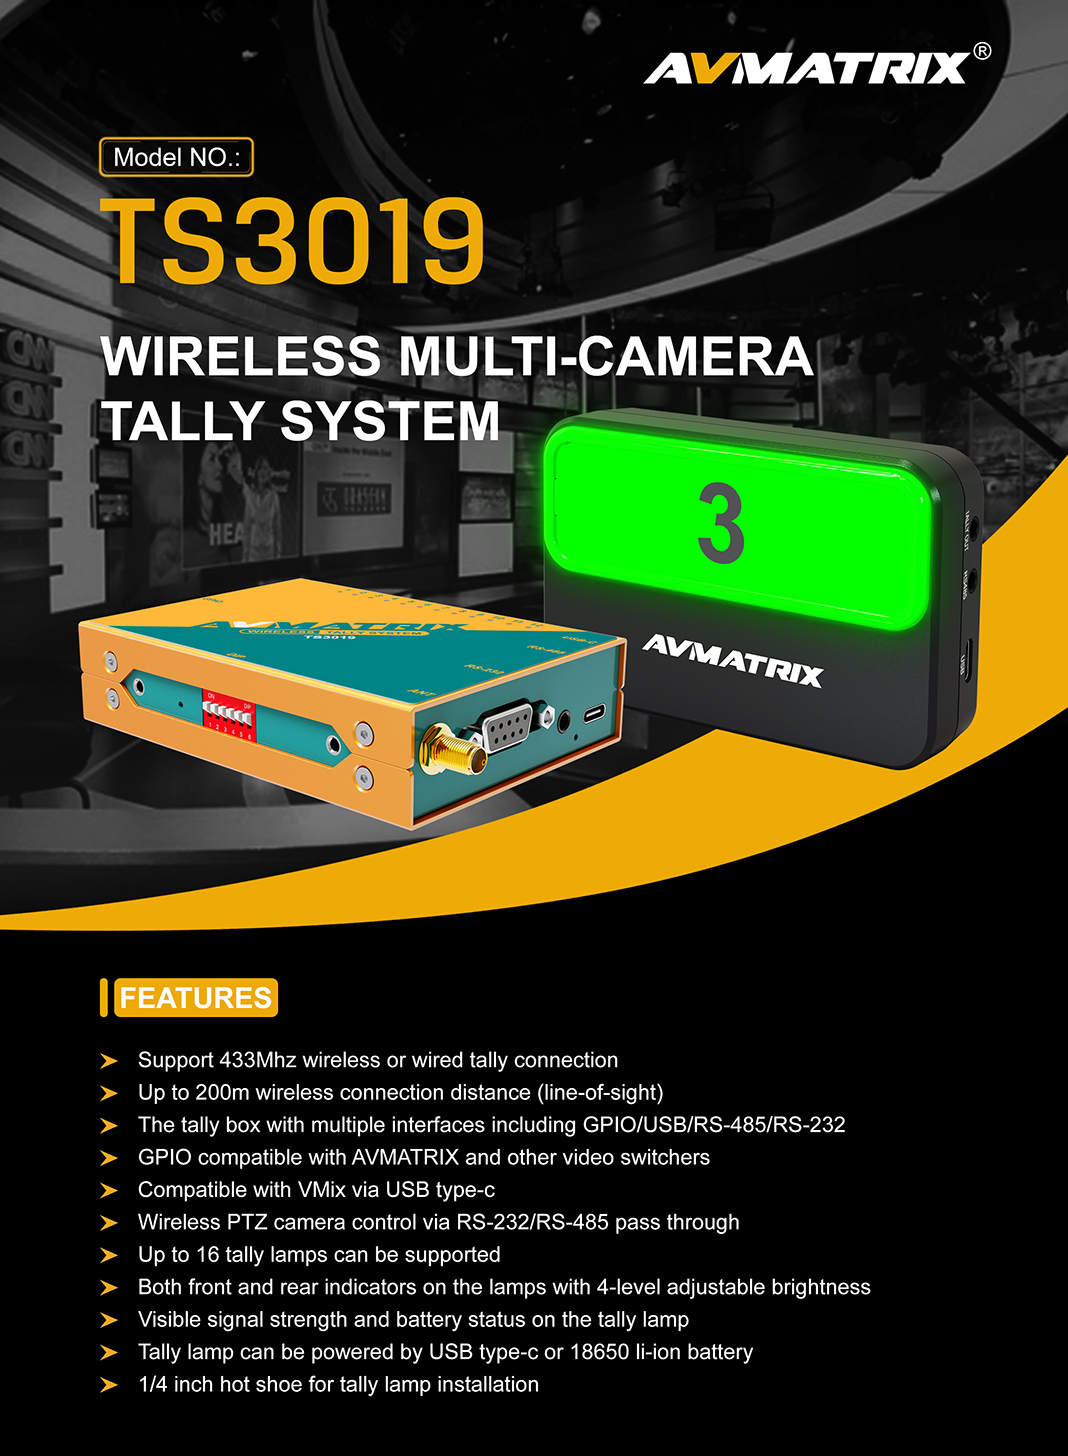 Avmatrix Wireless Multi-Camera Tally System - TS3019